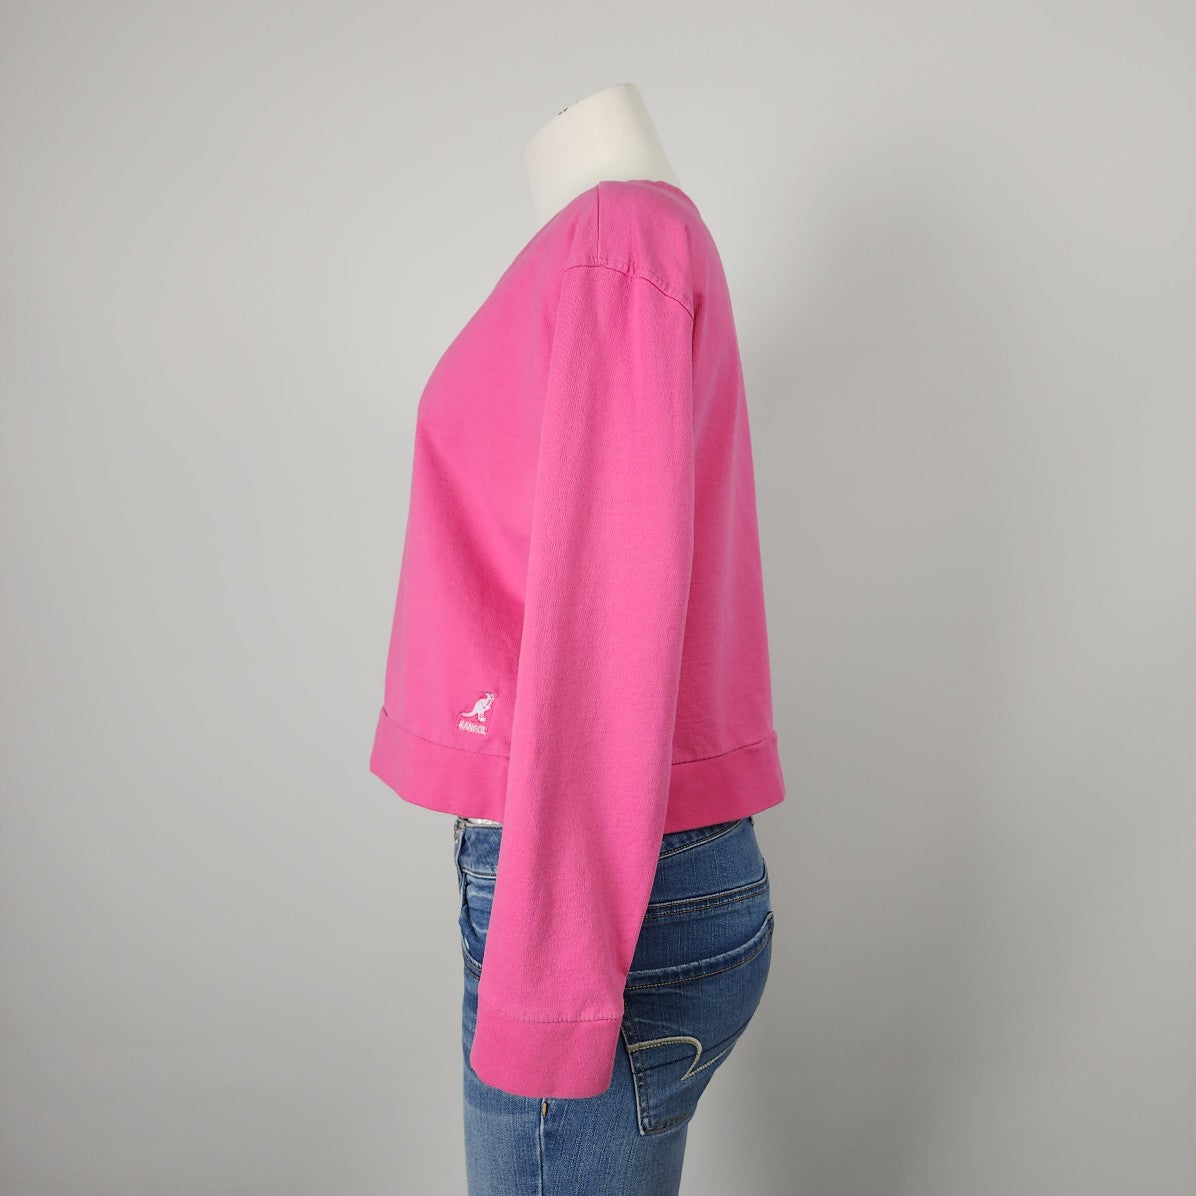 Kangol Pink Cotton Cropped Sweatshirt Size L